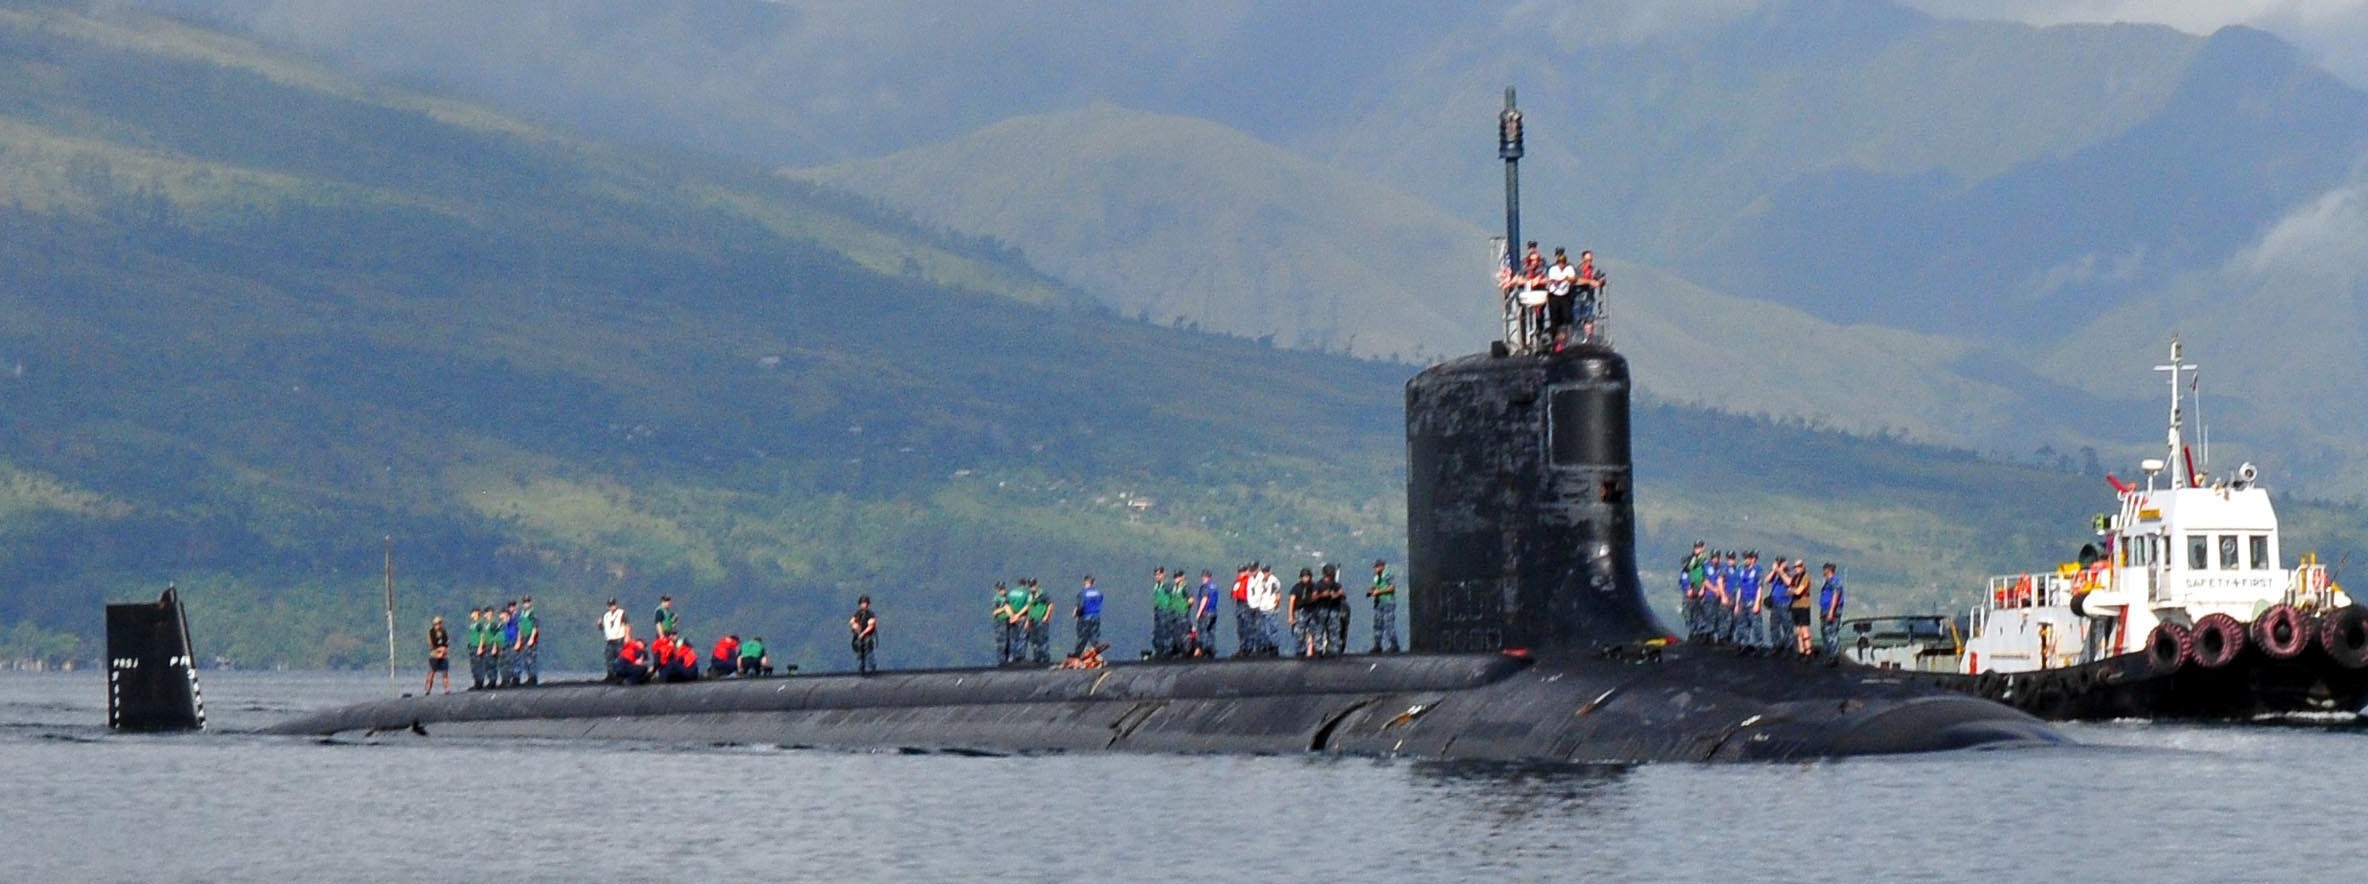 ssn-775 uss texas virginia class attack submarine navy 2011 28